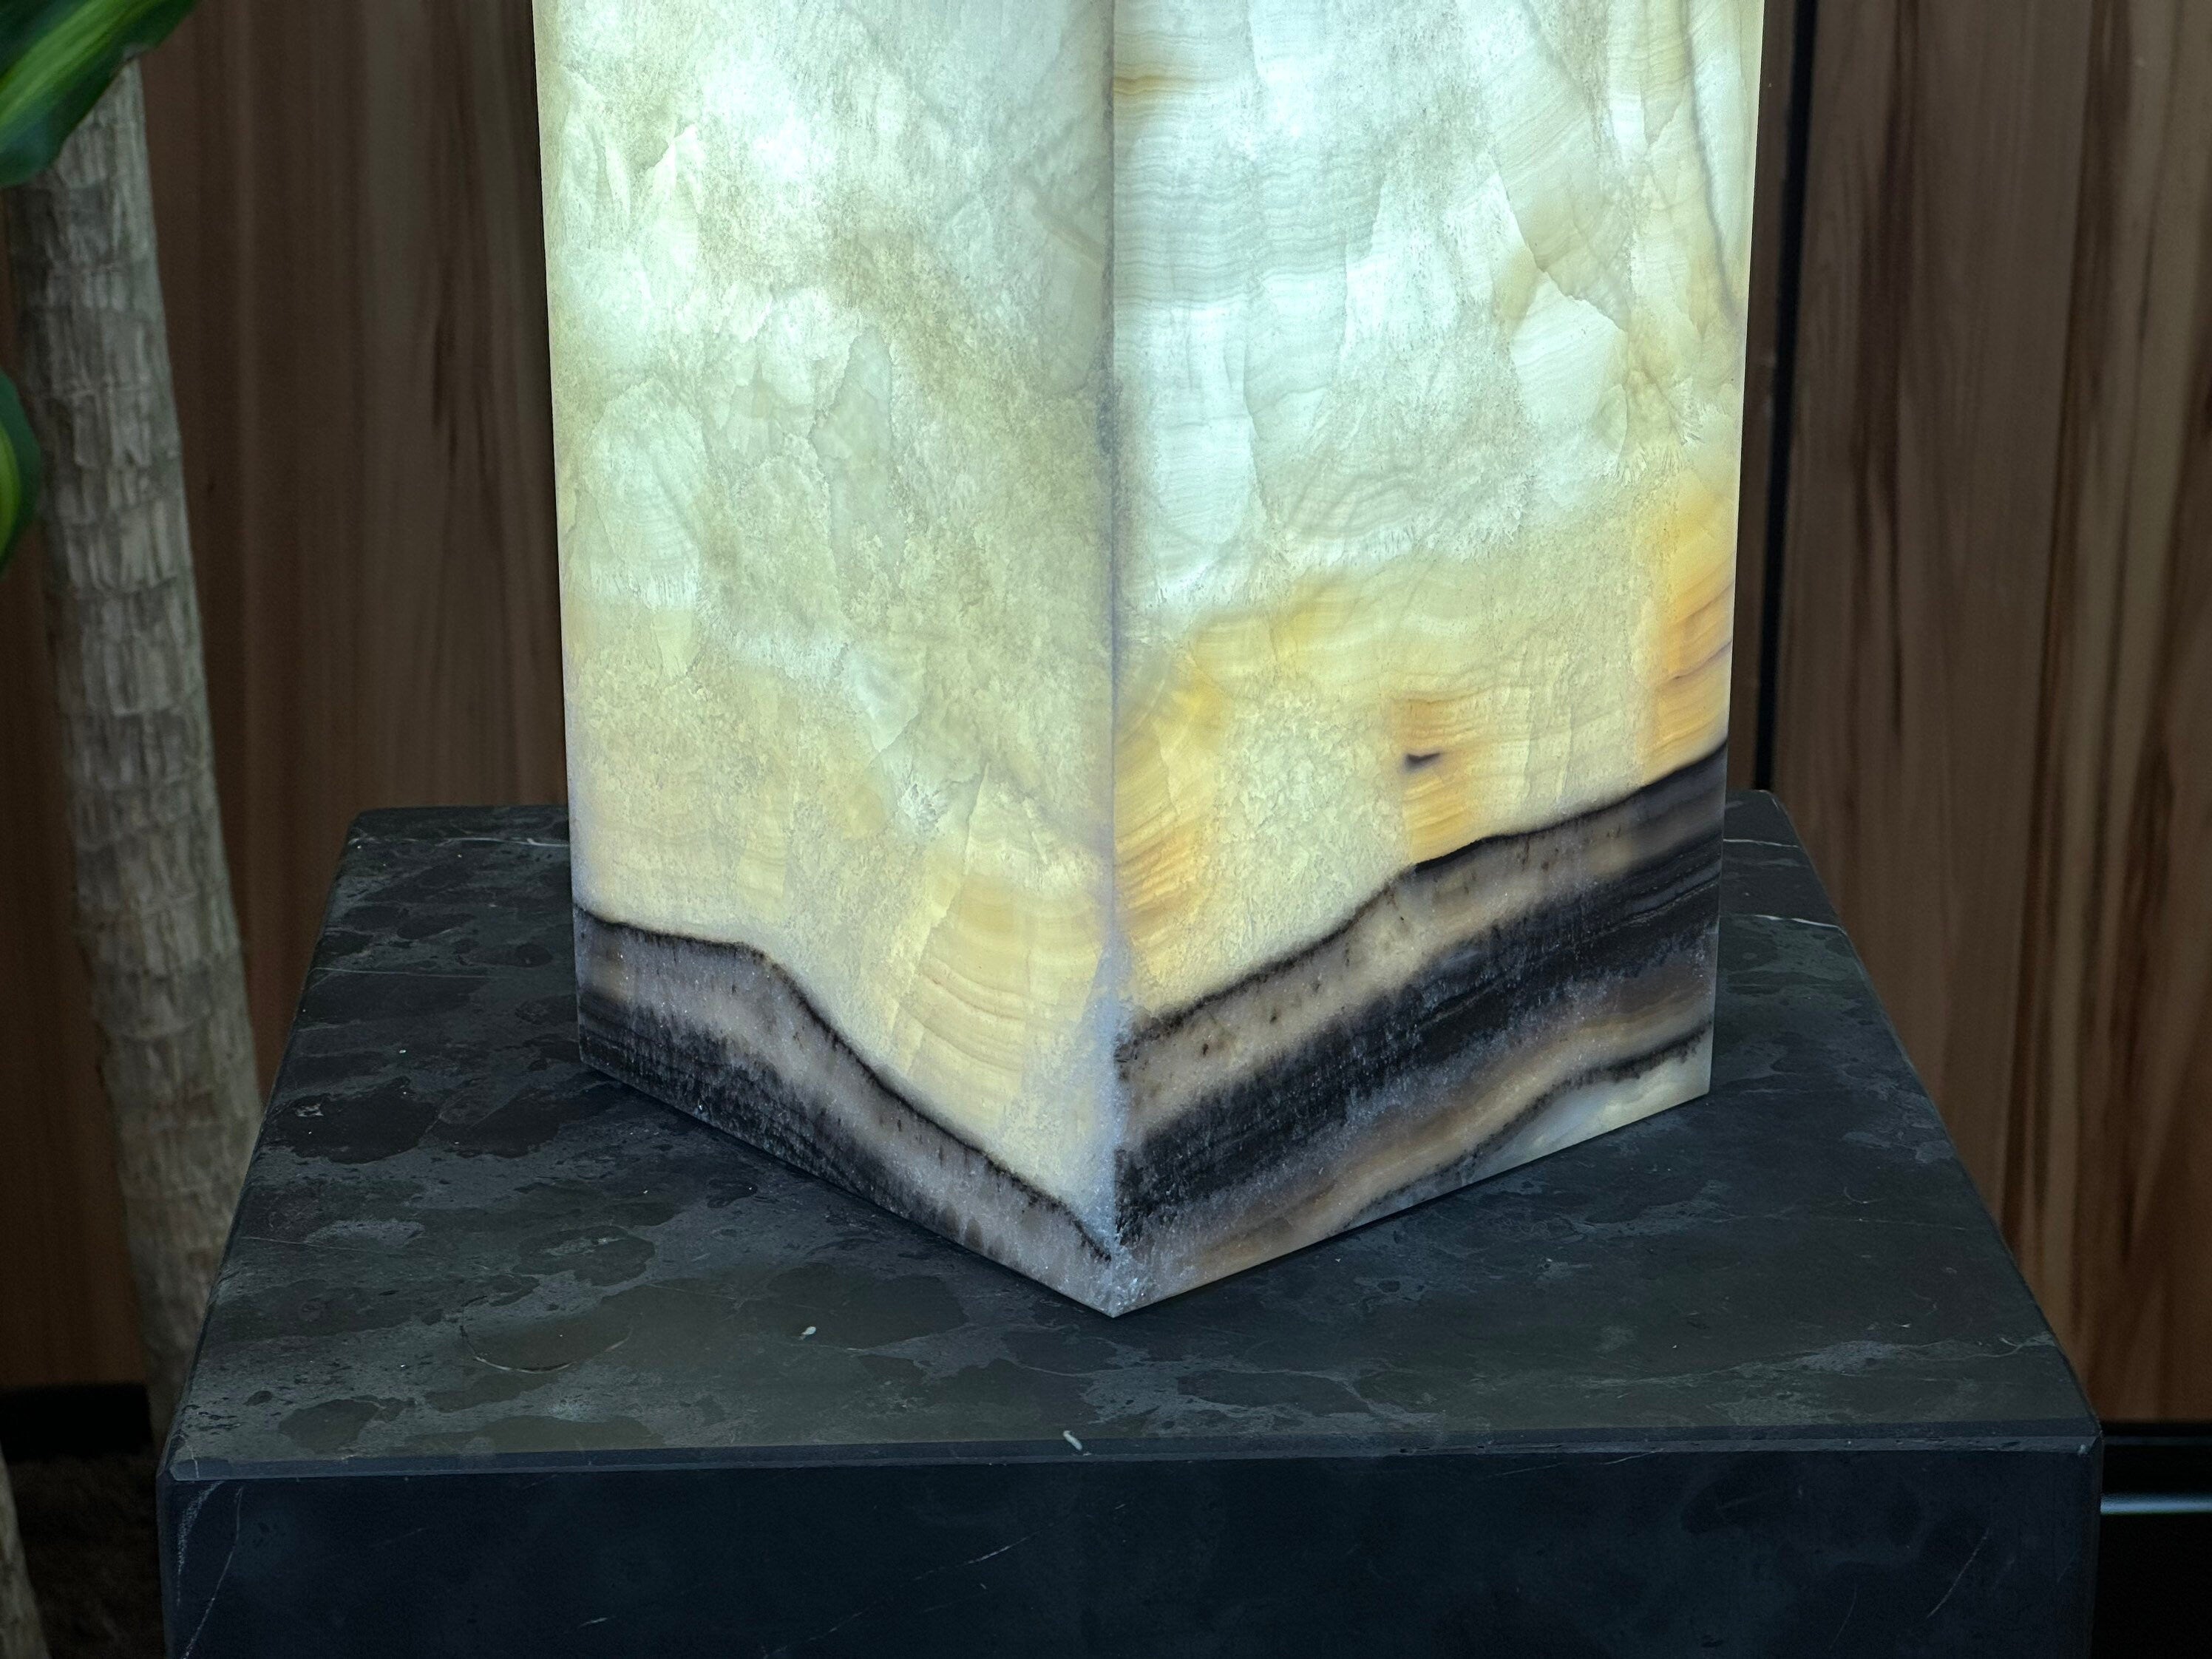 Ethereal Alabaster Lighting Sculpture - Modern Aesthetic - Home Decor - Majestic Centerpiece - Illuminating Lamp